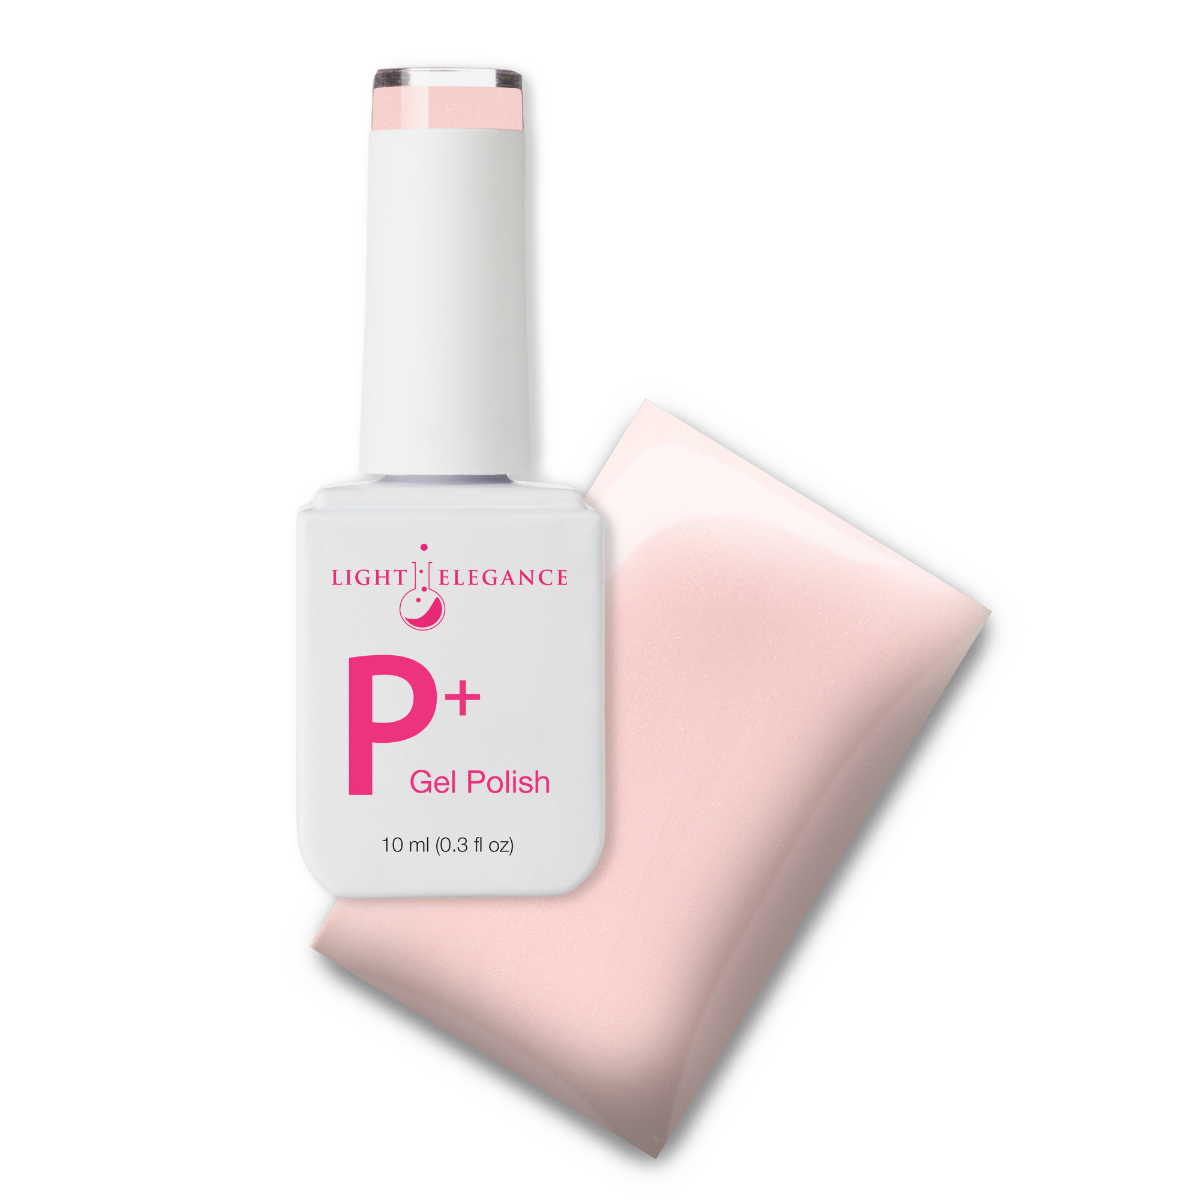 Light Elegance P+ Soak Off Color Gel - Two Straws, One Shake :: New Packaging